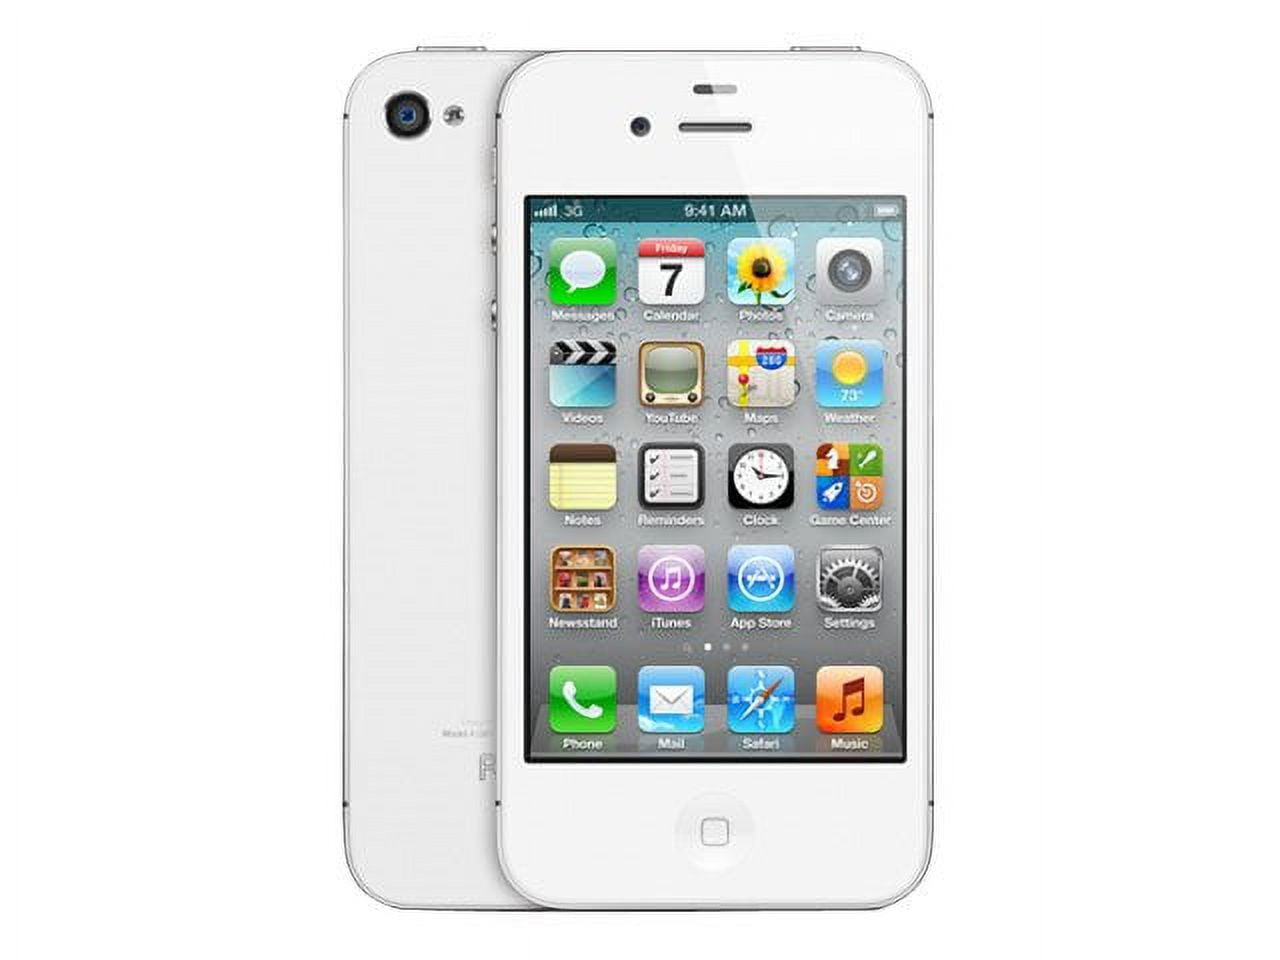 iphone4s white 32gb